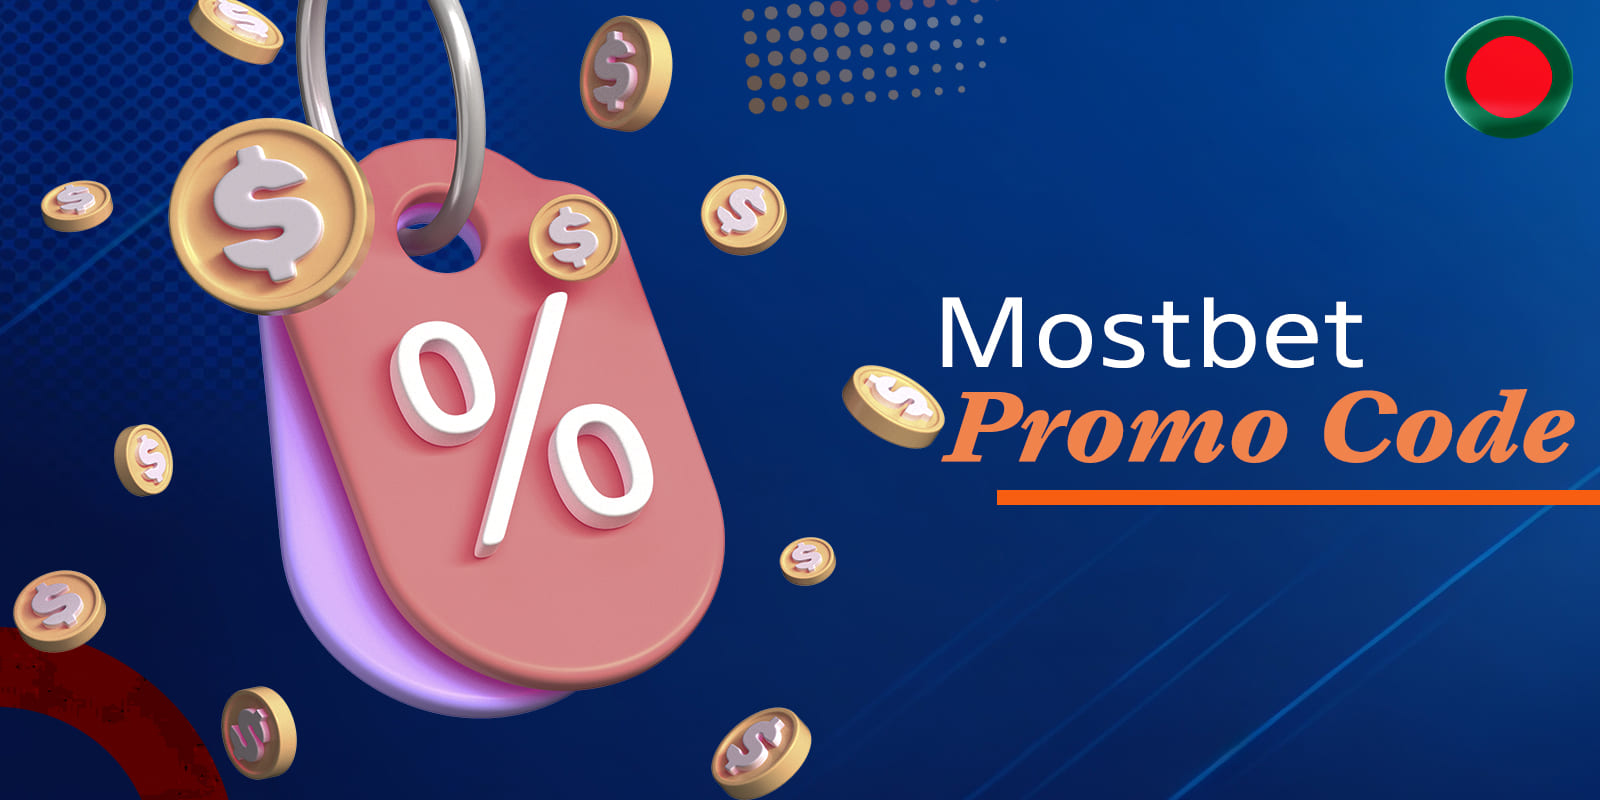 Use Mostbet promo codes to get bonuses